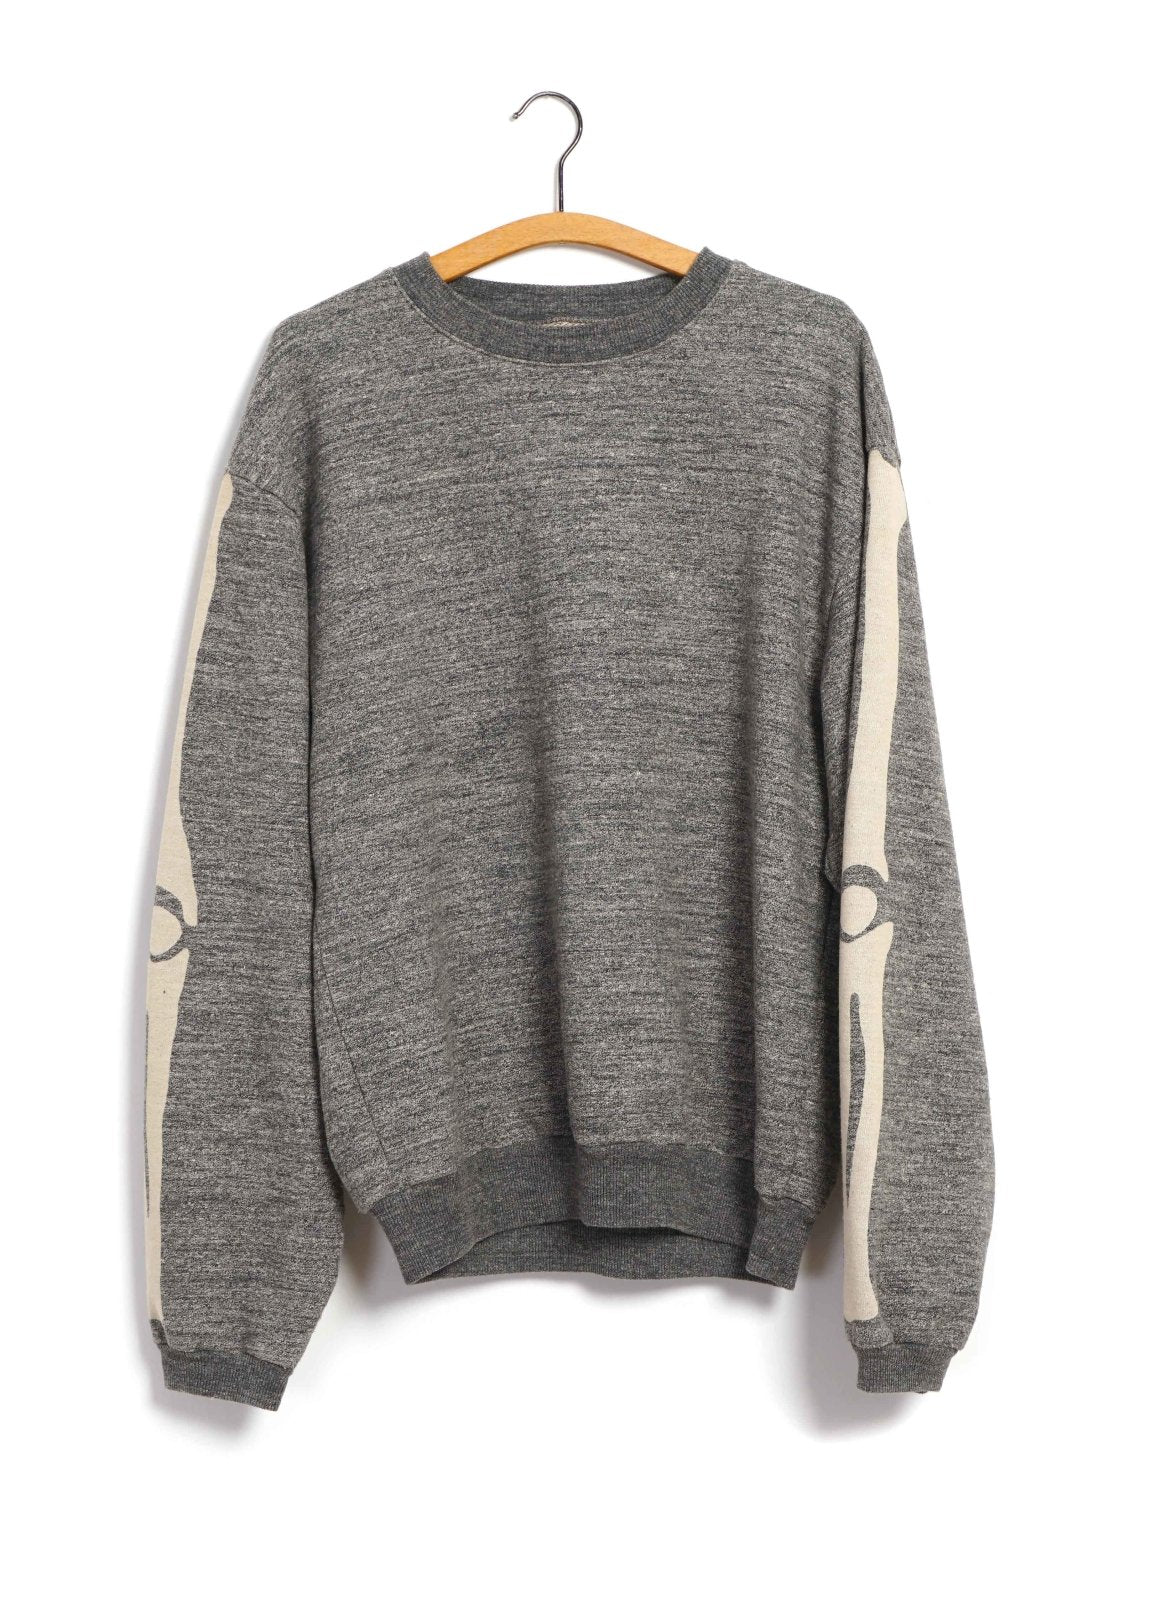 BIG CREW BONE | Oversized Gandrelle Fleece Sweater | Charcoal